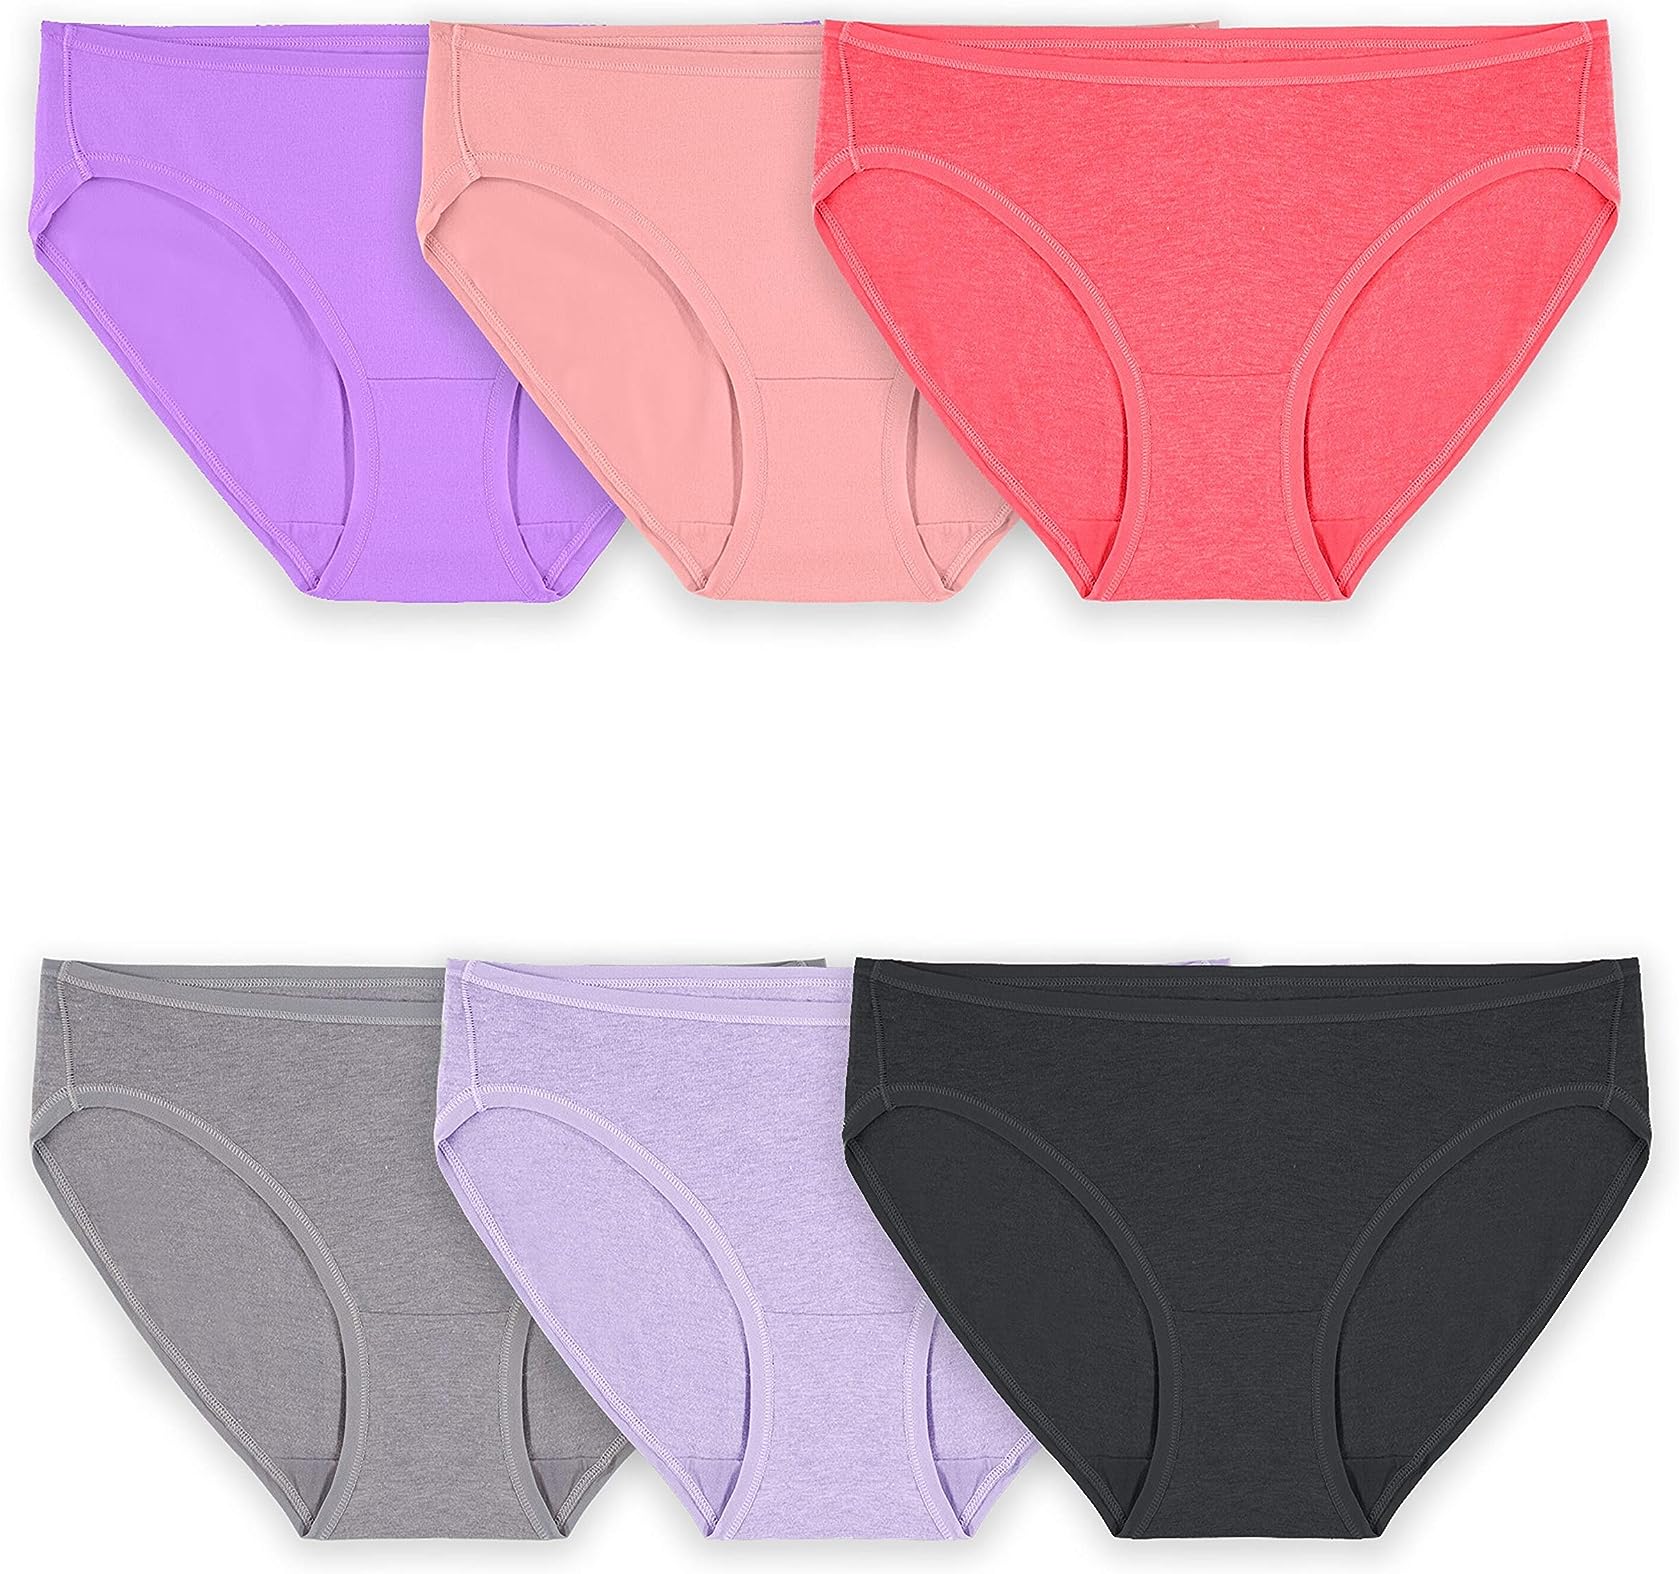 Women's 360 Stretch Comfort Cotton Bikini Panty, Assorted 6 Pack